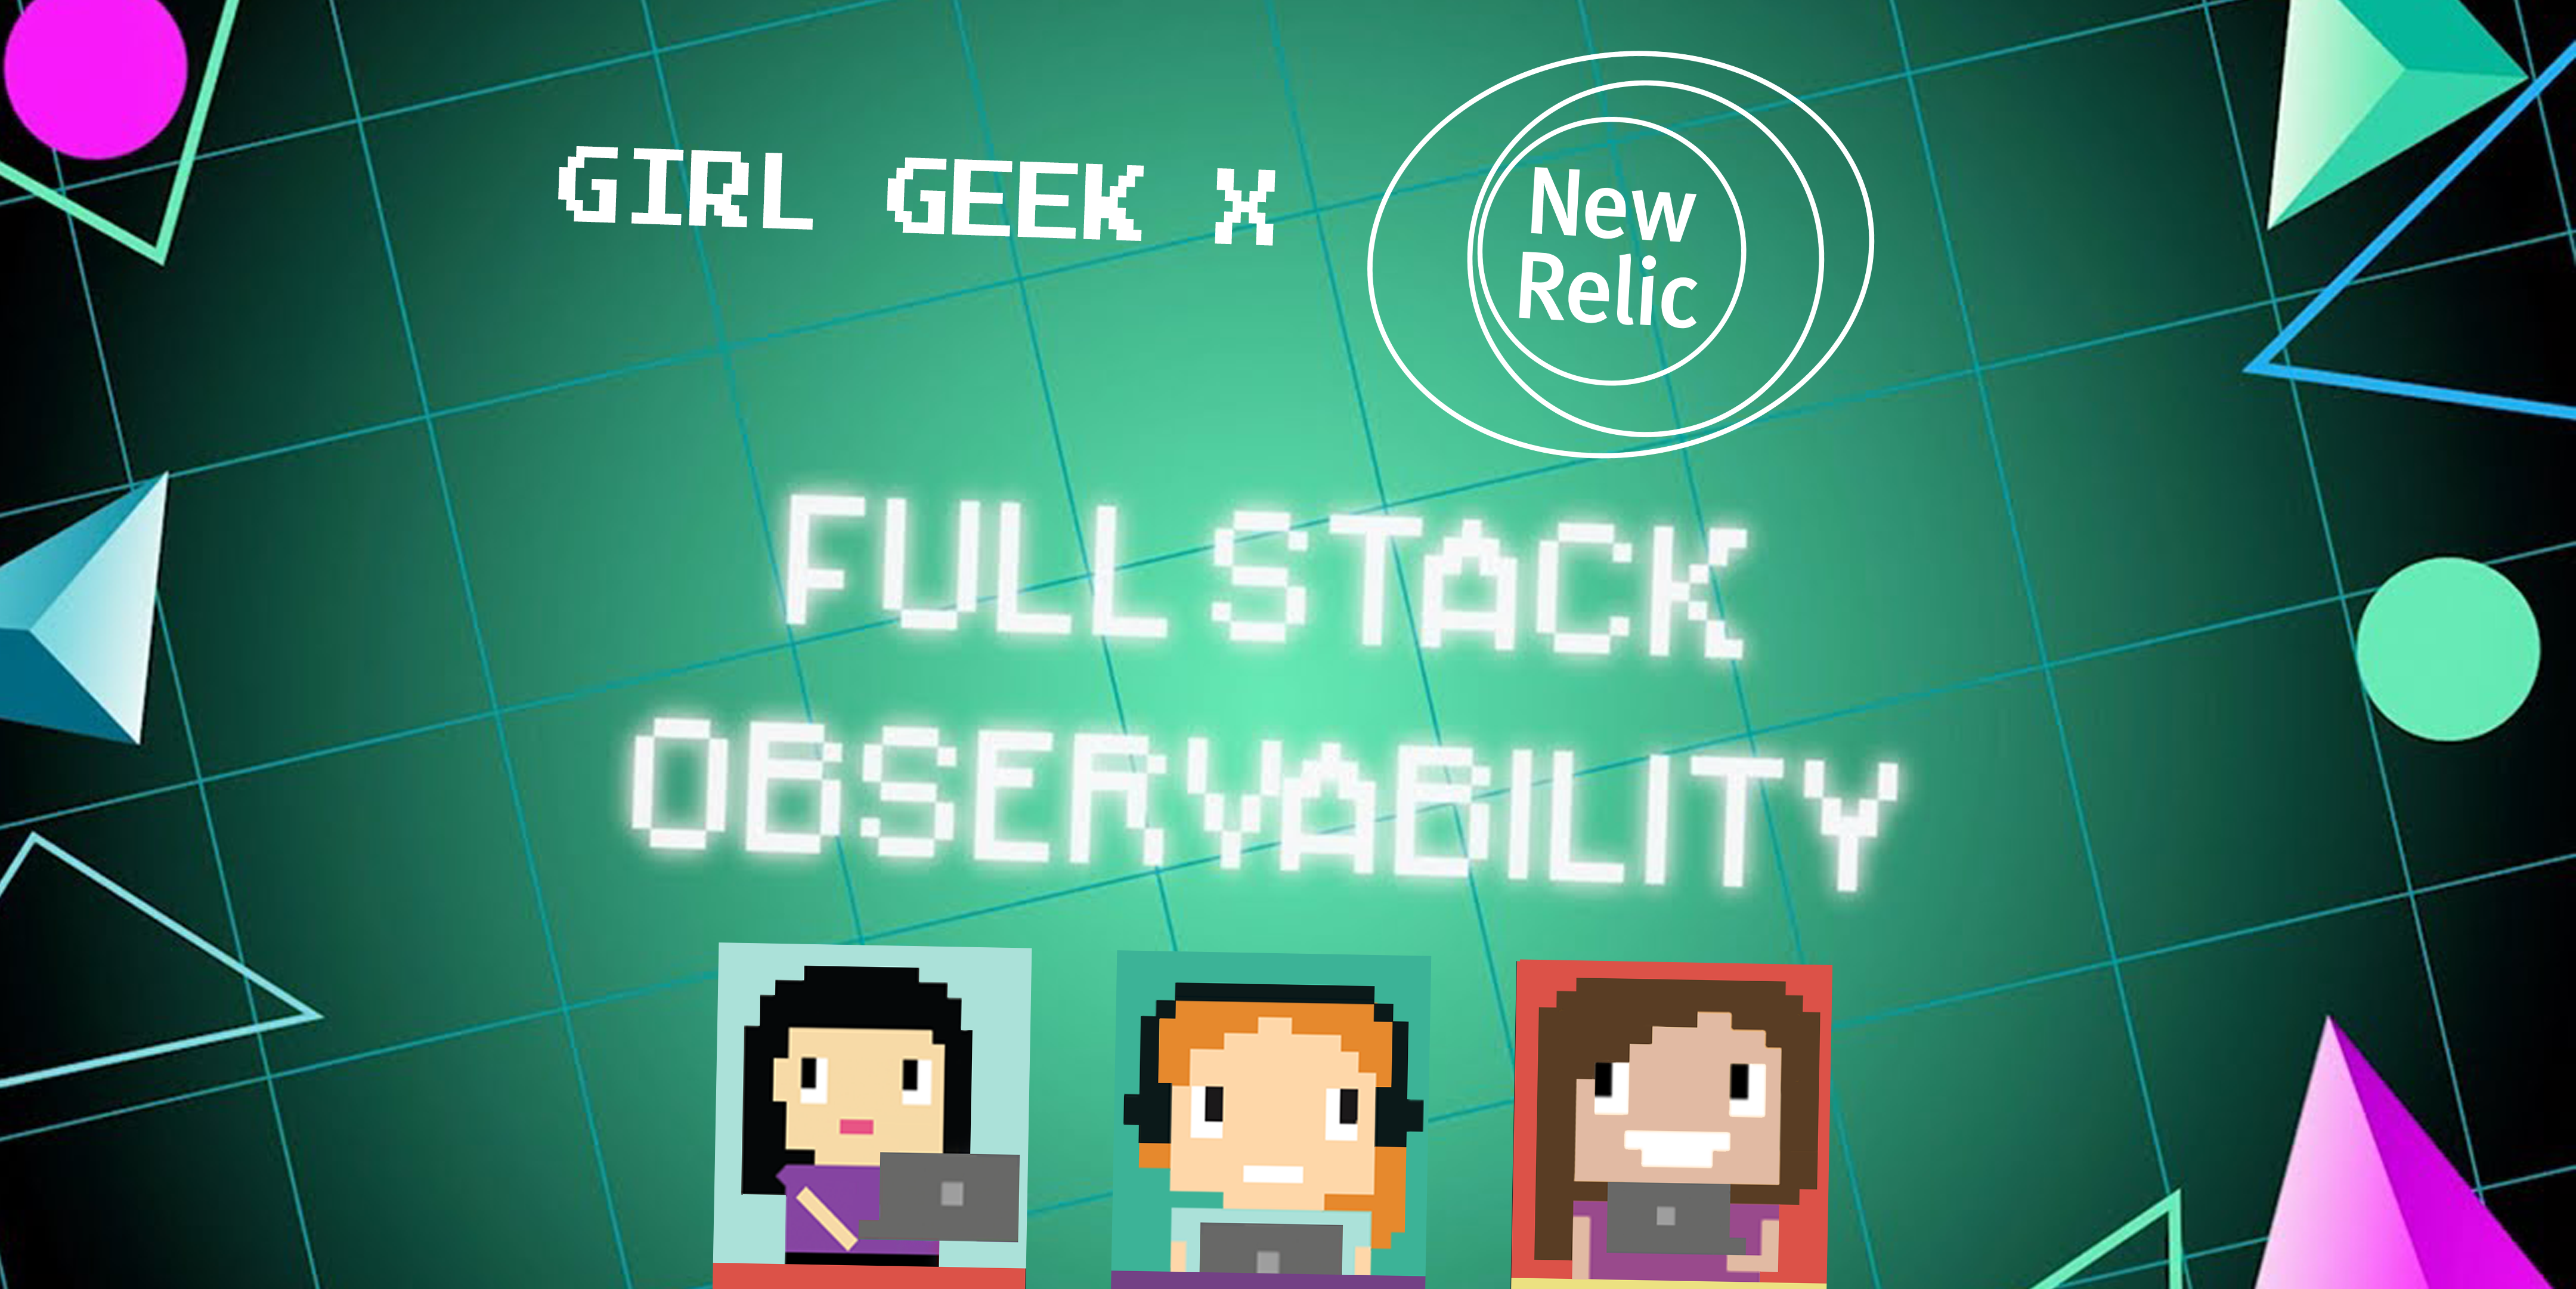 full stack observability girl geek x new relic